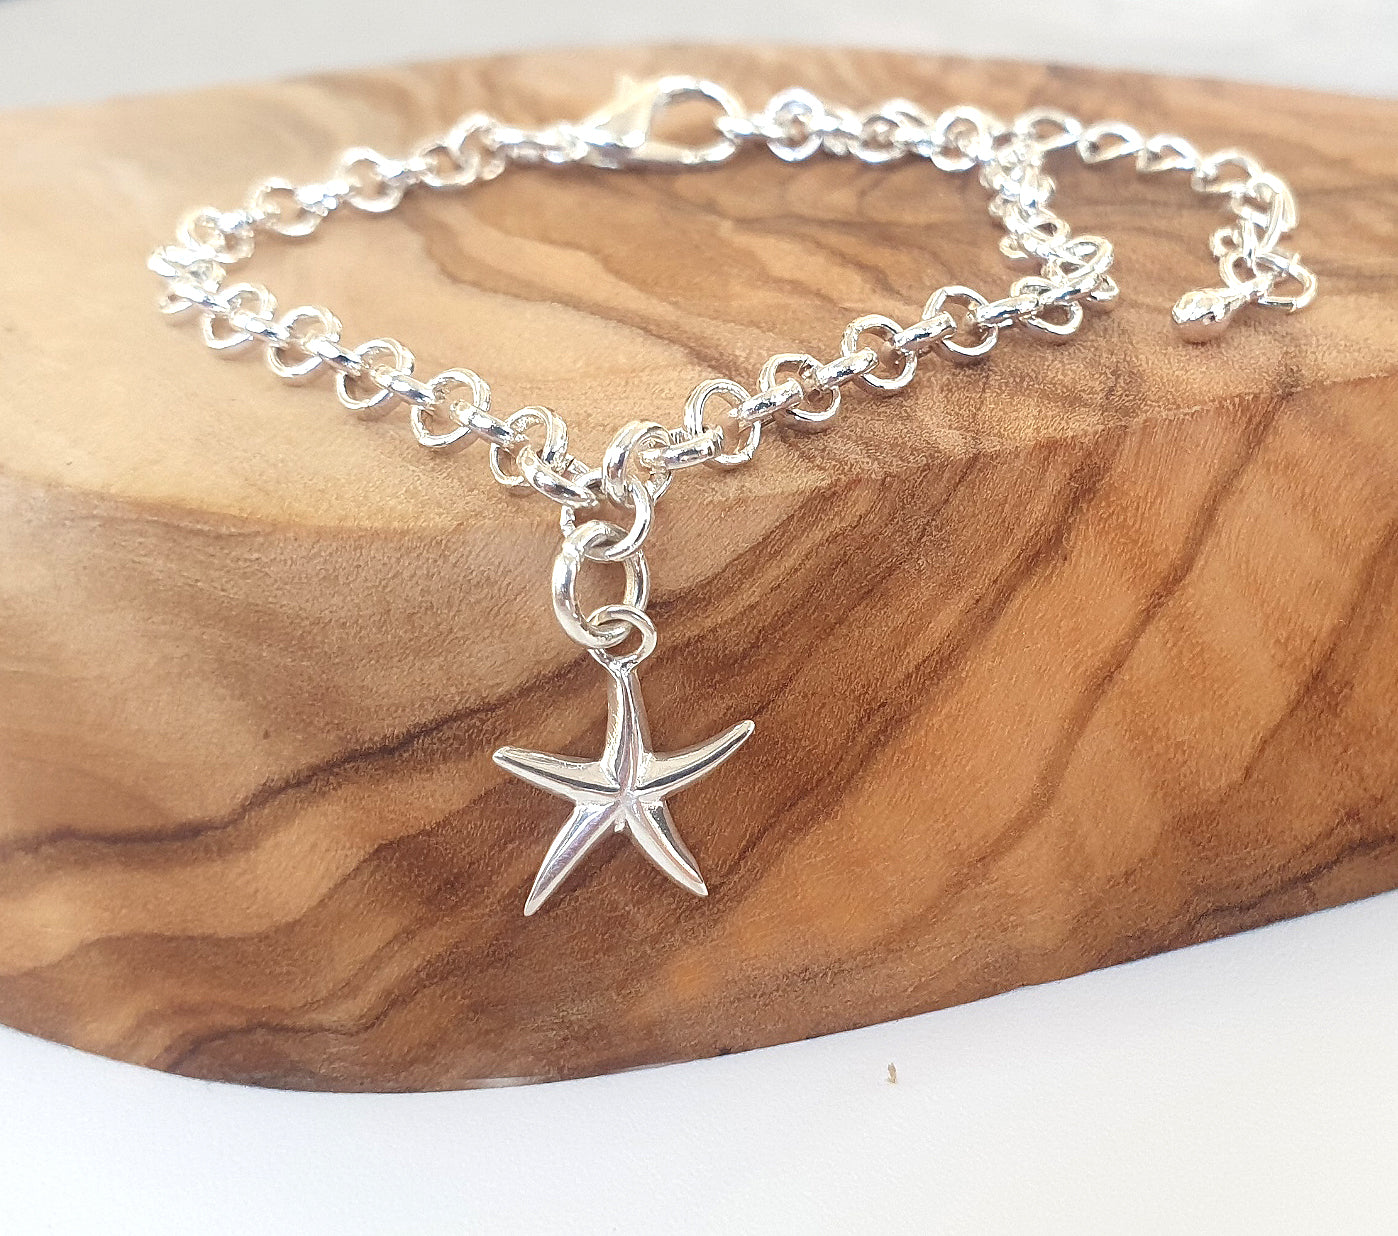 Charmed Starfish Link Bracelet, Adjustable for Women and Girl's